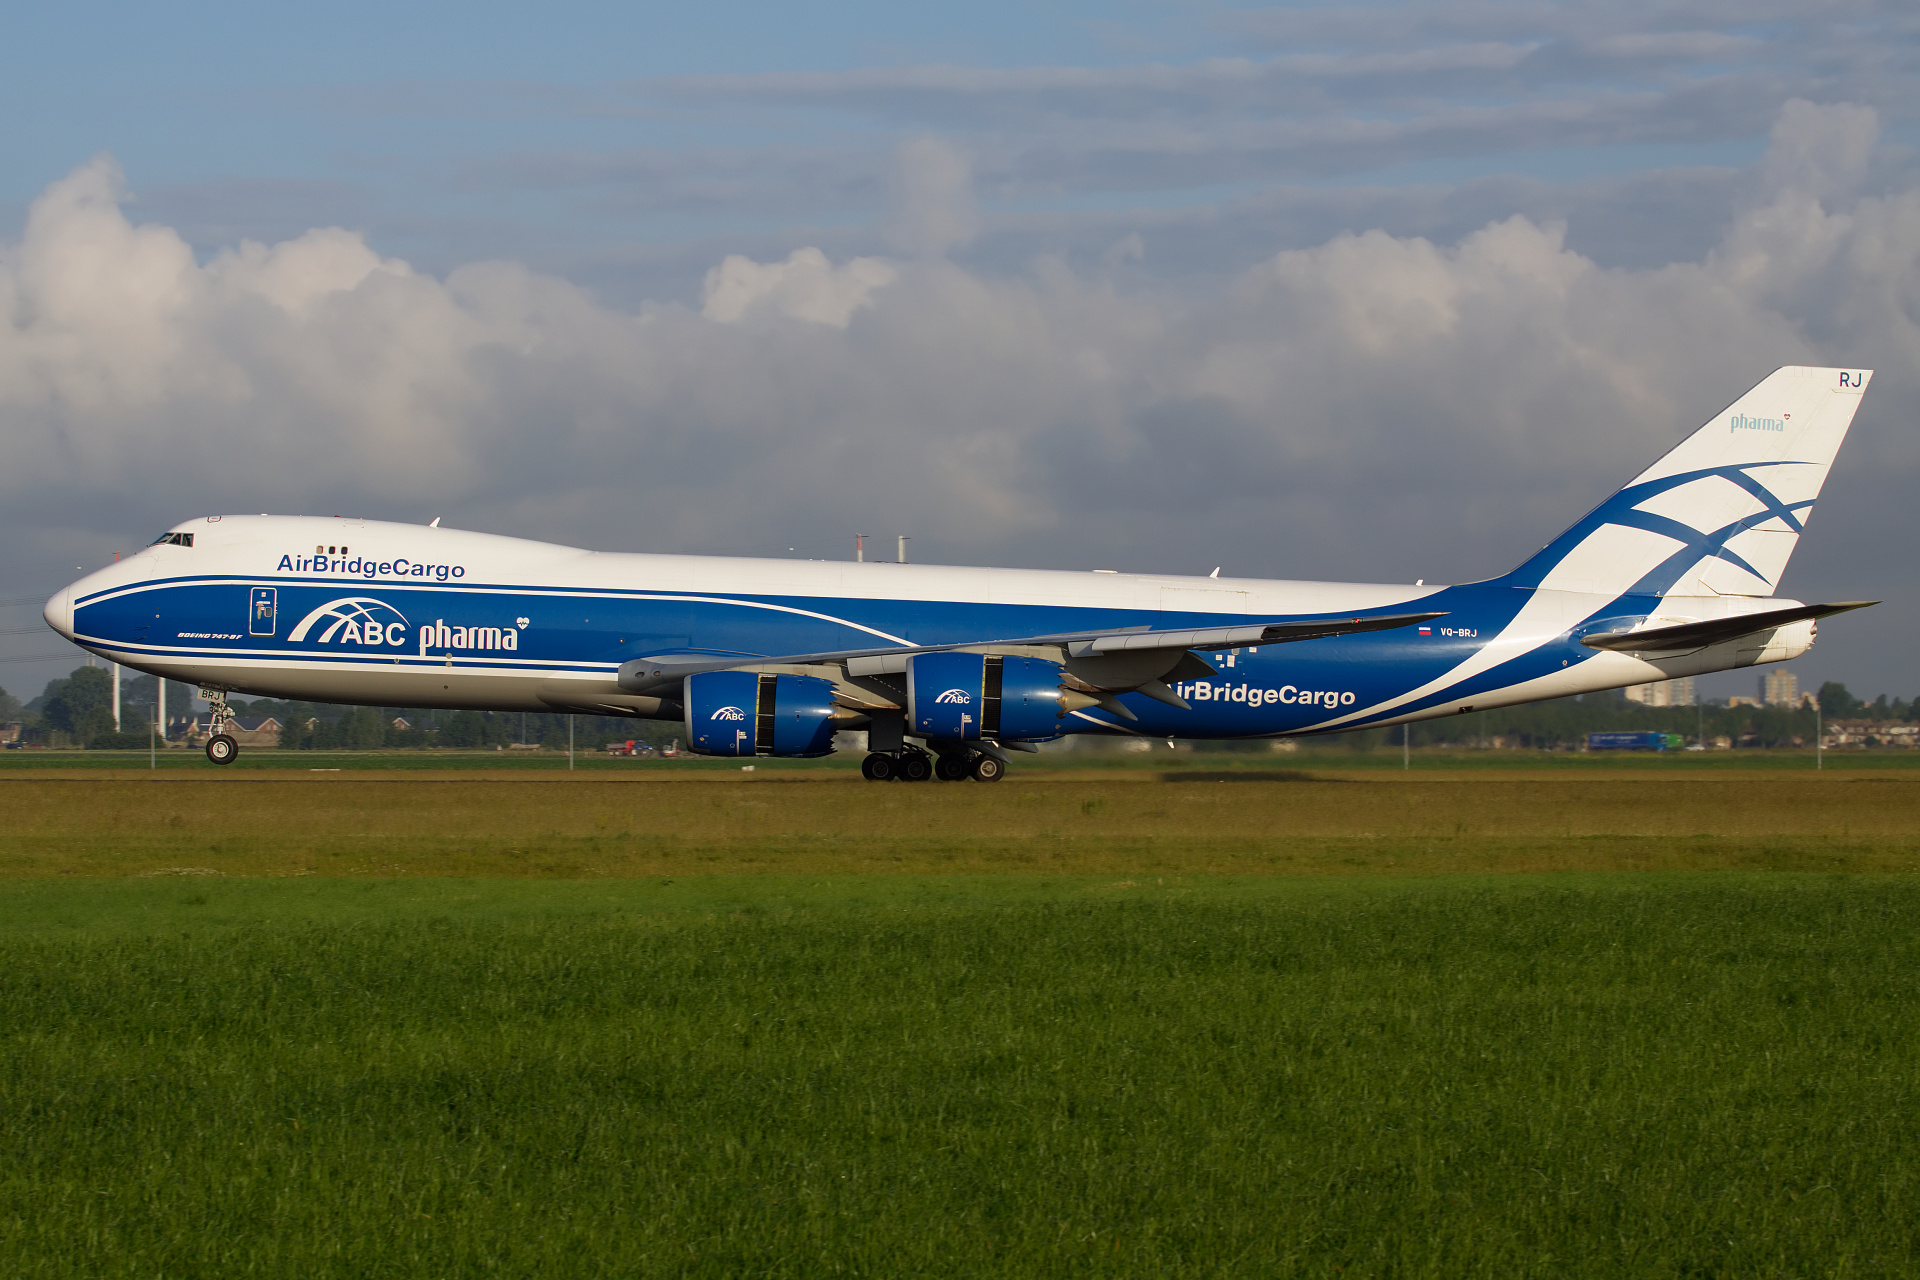 VQ-BRJ (ABC Pharma livery) (Aircraft » Schiphol Spotting » Boeing 747-8F » AirBridgeCargo Airlines)